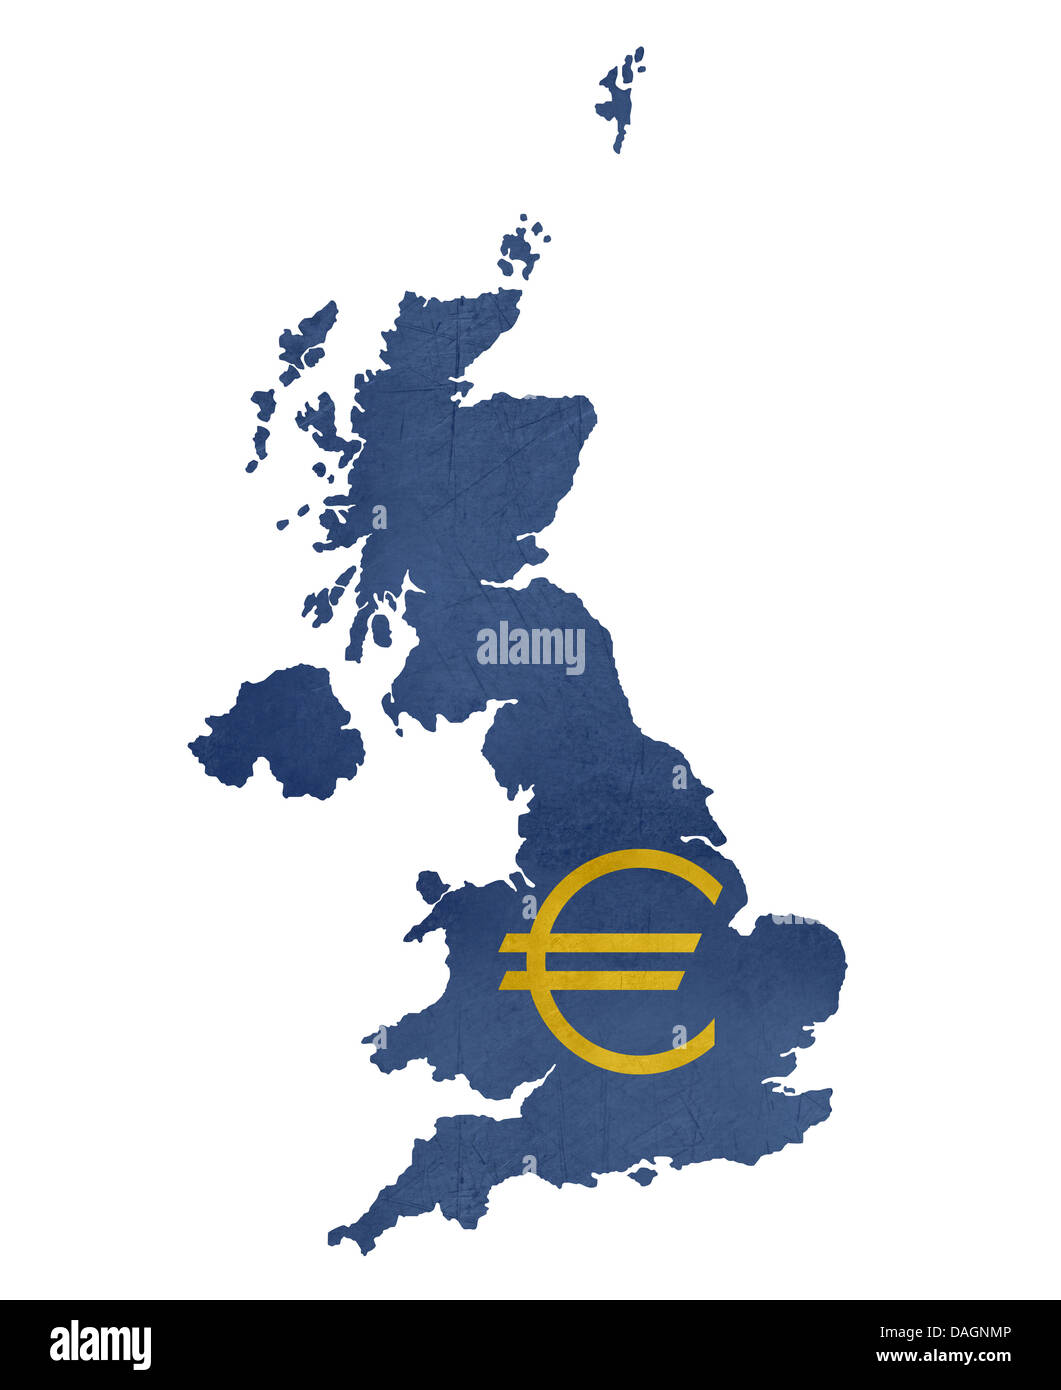 European currency symbol on map of United Kingdom isolated on white background. Stock Photo